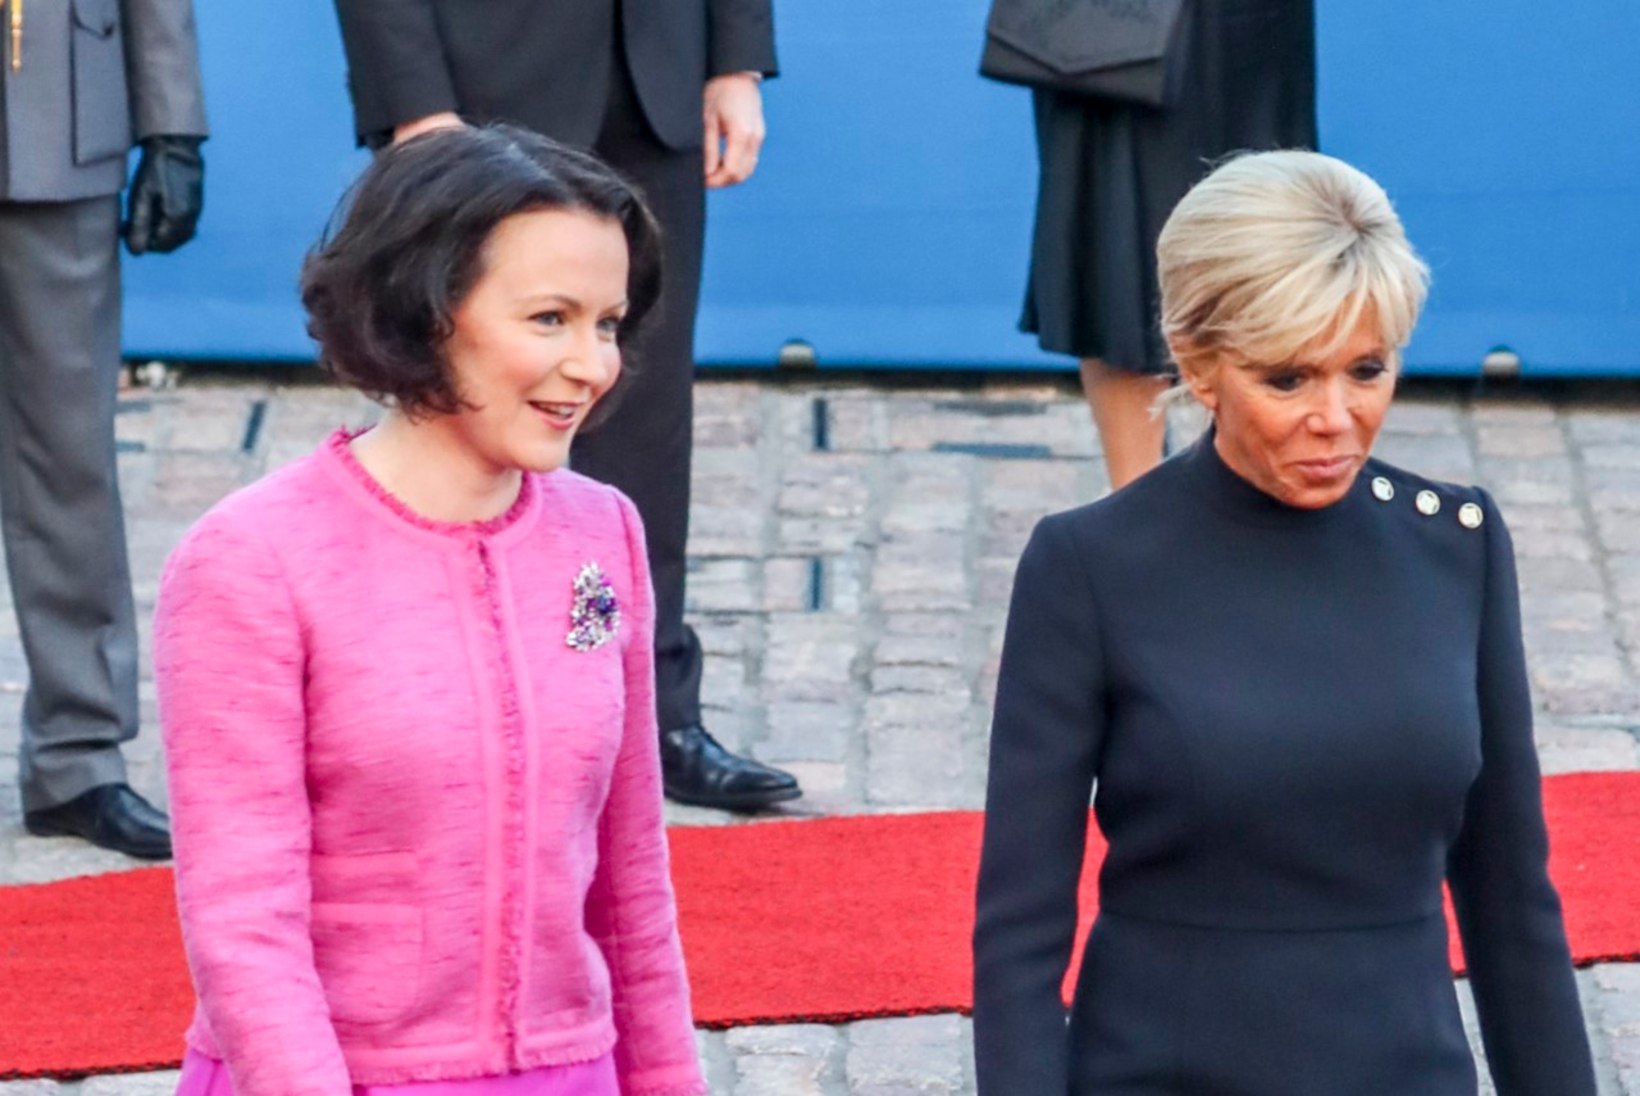 FOTOD | Macron saabus koos abikaasaga Soome